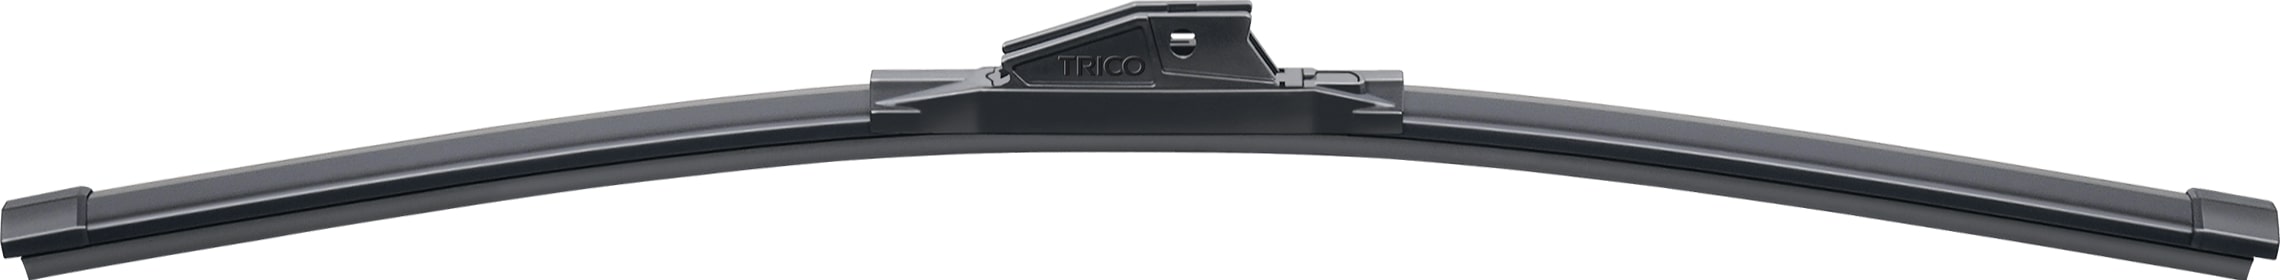 TRICO Wiper Blades - 35 Series ICE 28"